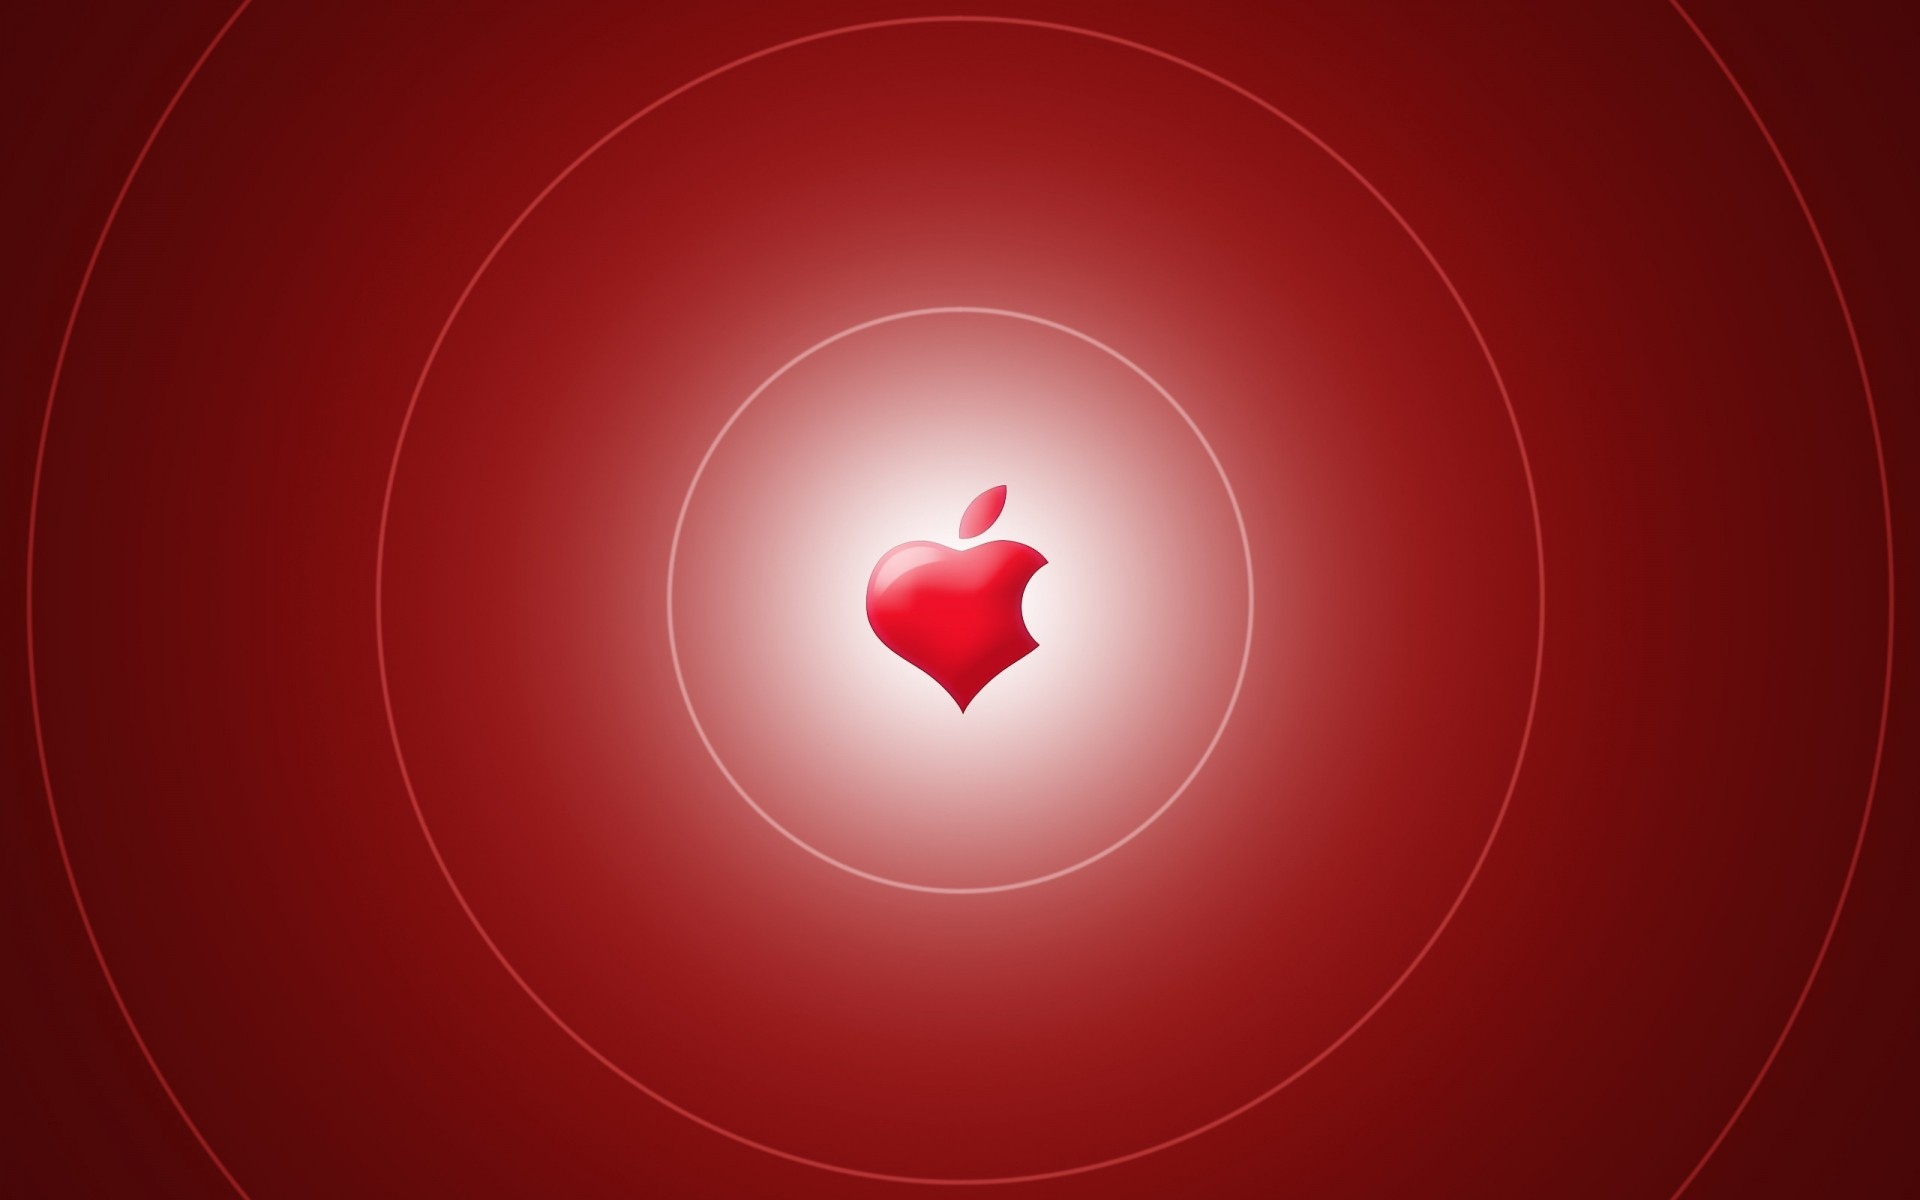 apple shape abstract shining design heart illustration art love graphic wallpaper light desktop romance image background red picture poster